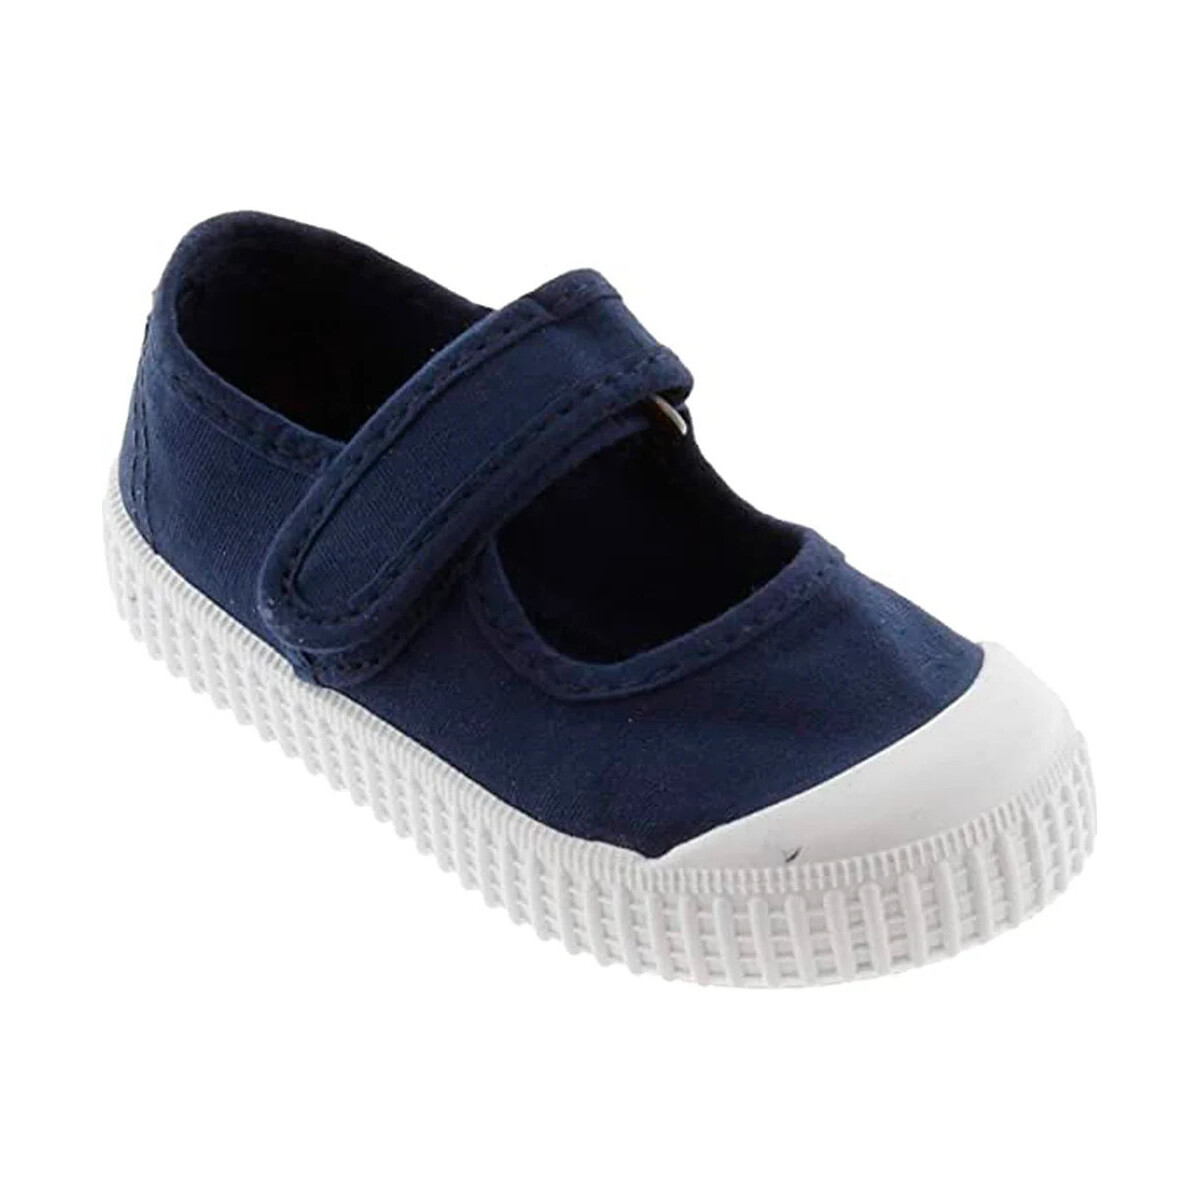 Sapatos Rapariga Sabrinas Victoria MERCEDITA  136605 TELA Azul